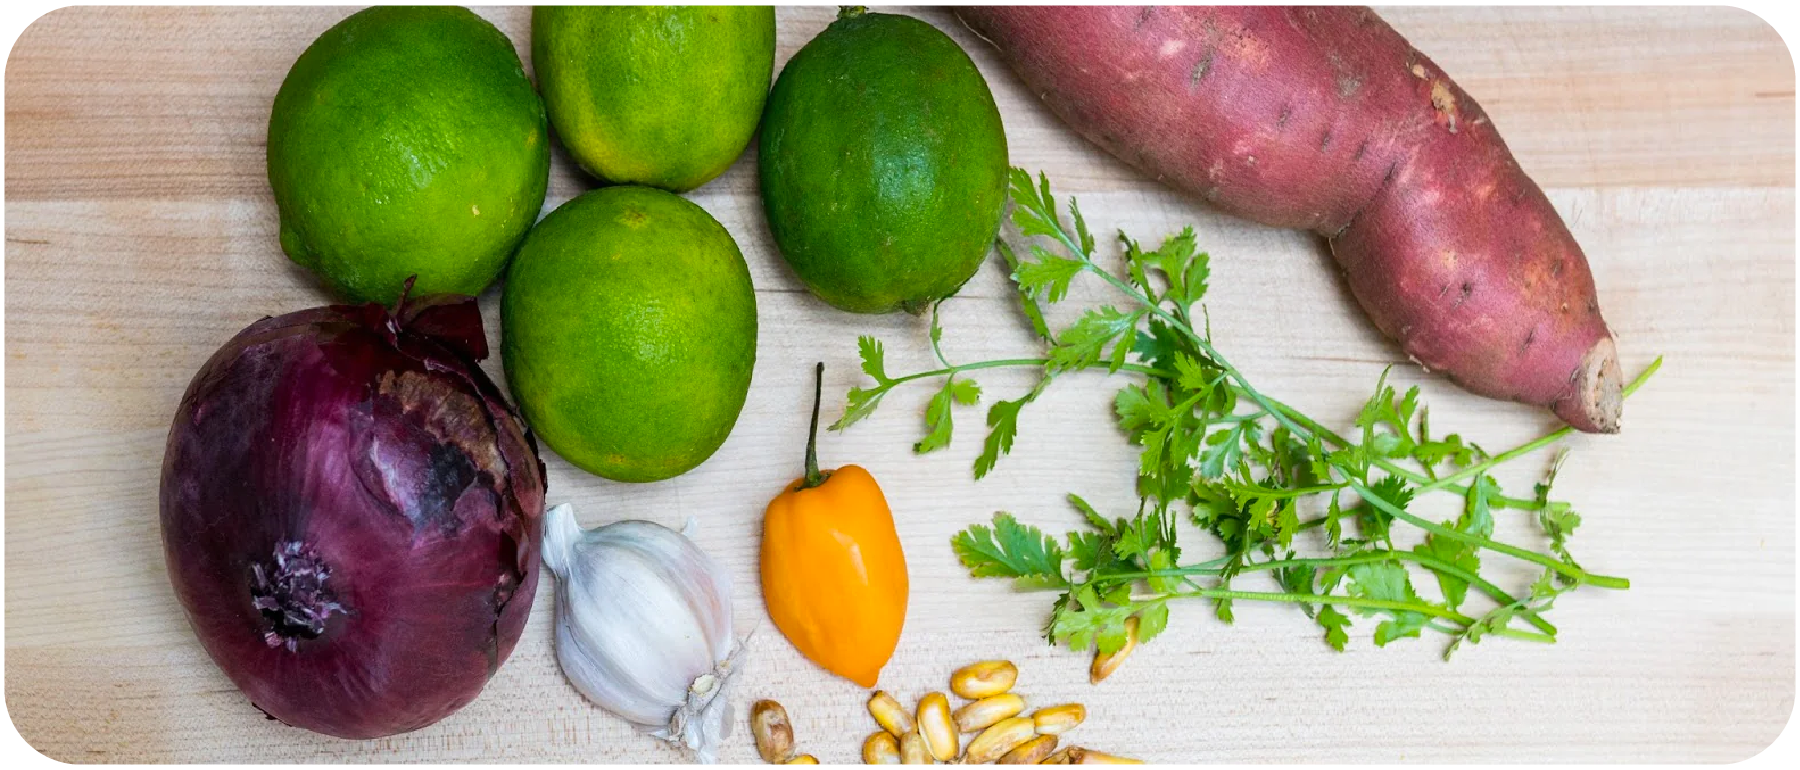 5 Essential ingredients for Peruvian Food